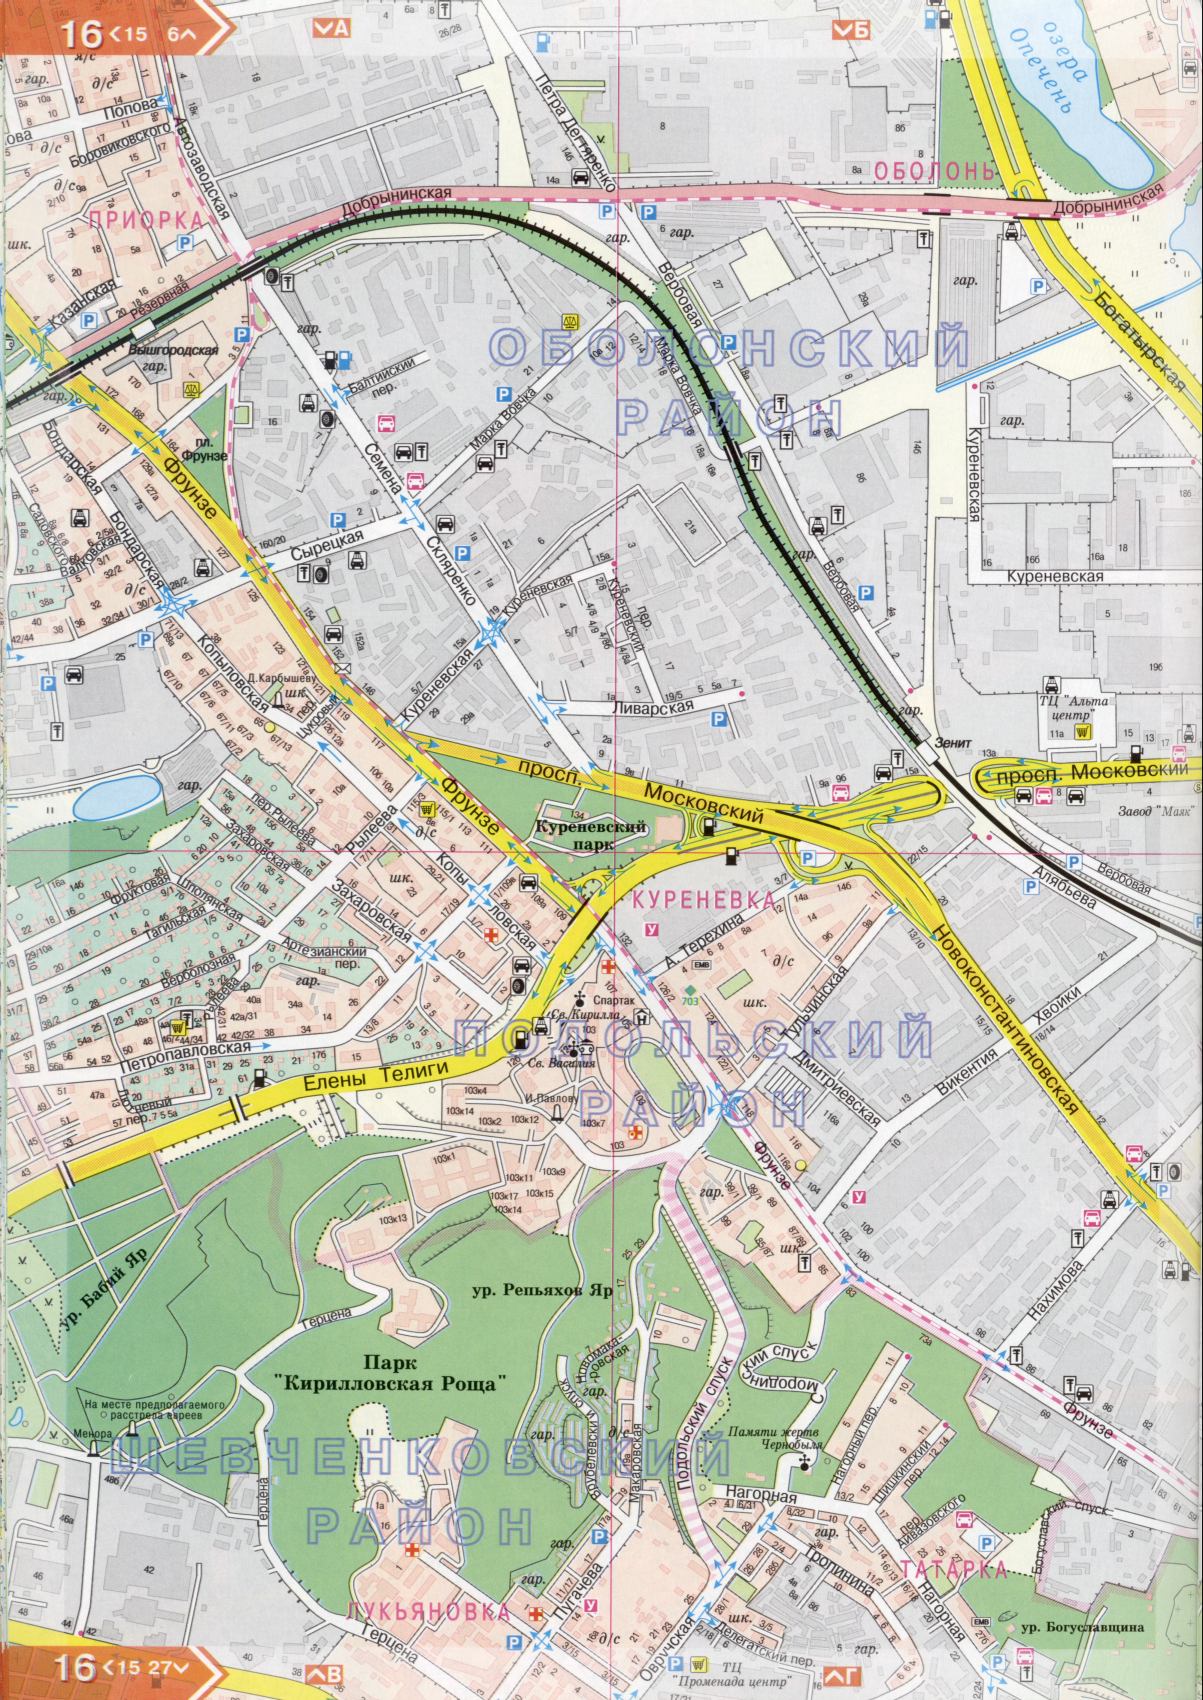 Kiev map details 1cm = 150m for 45 sheets. Map of Kiev from the atlas of highways. Download a detailed map, D1 - Podolsk district Kiev